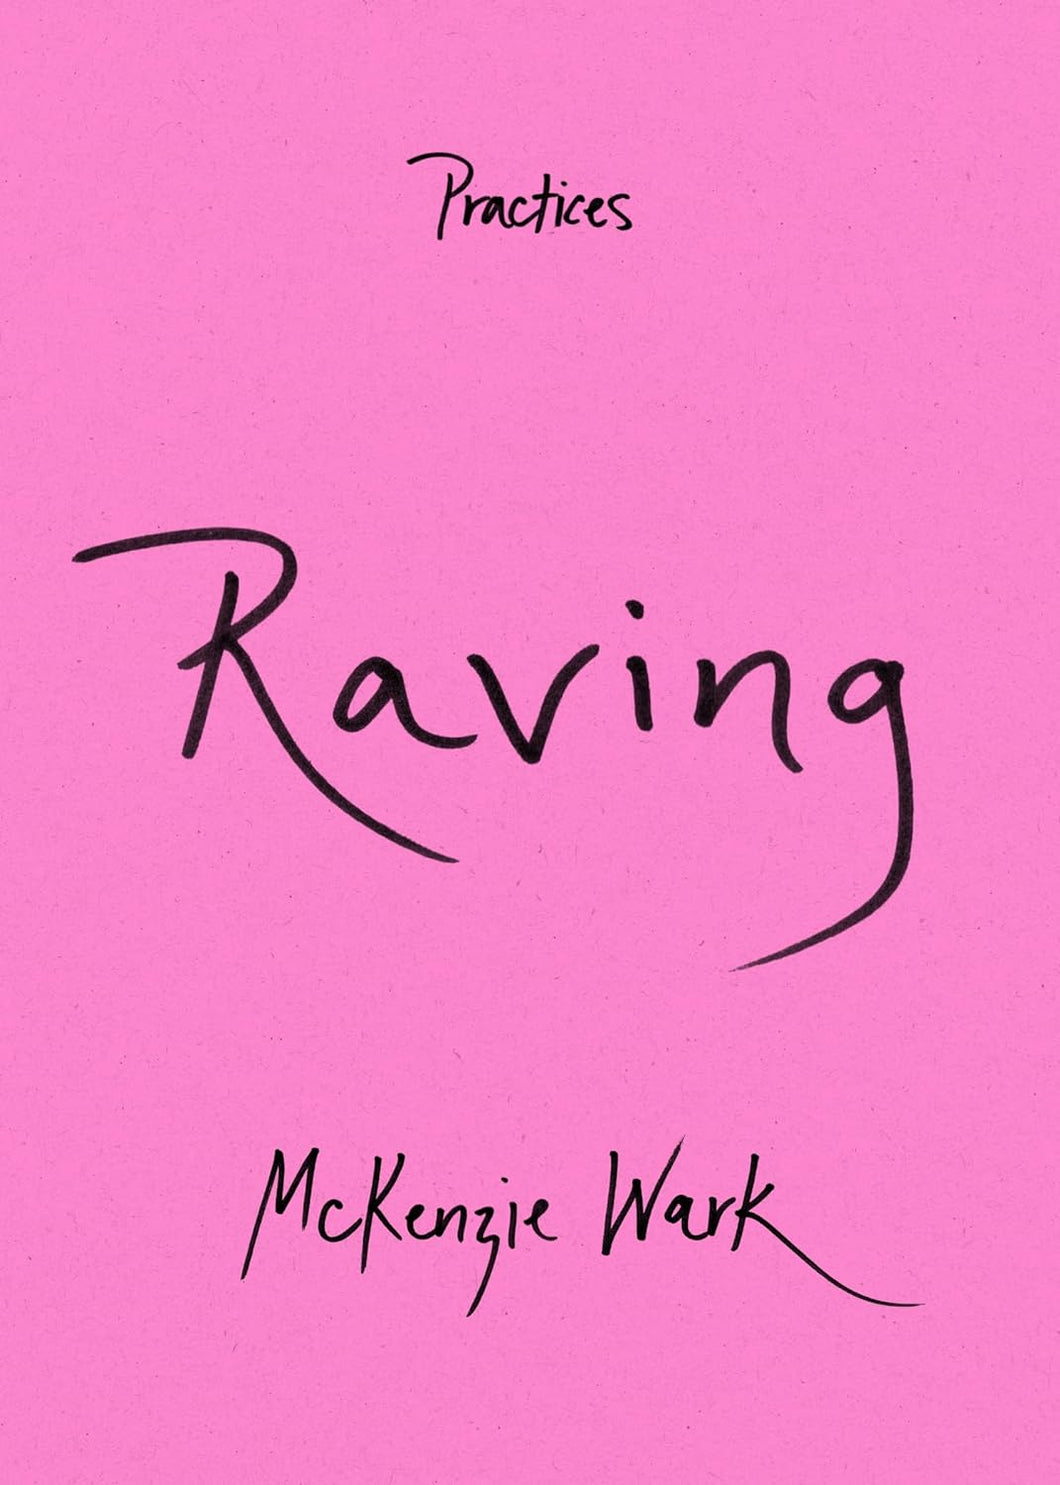 Raving (Practices) by McKenzie Wark